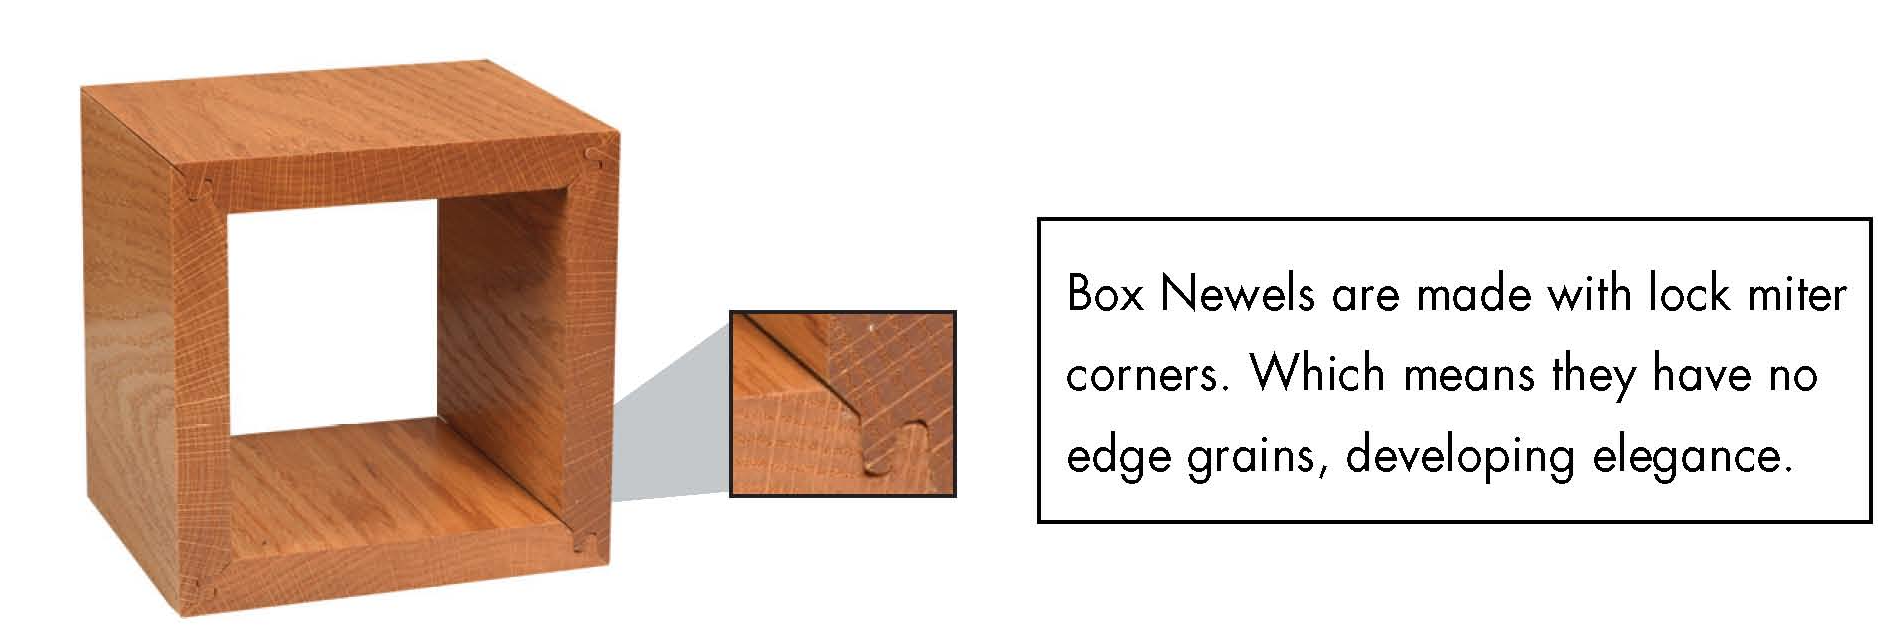 Lock Mitered Corners - Box Newel Posts